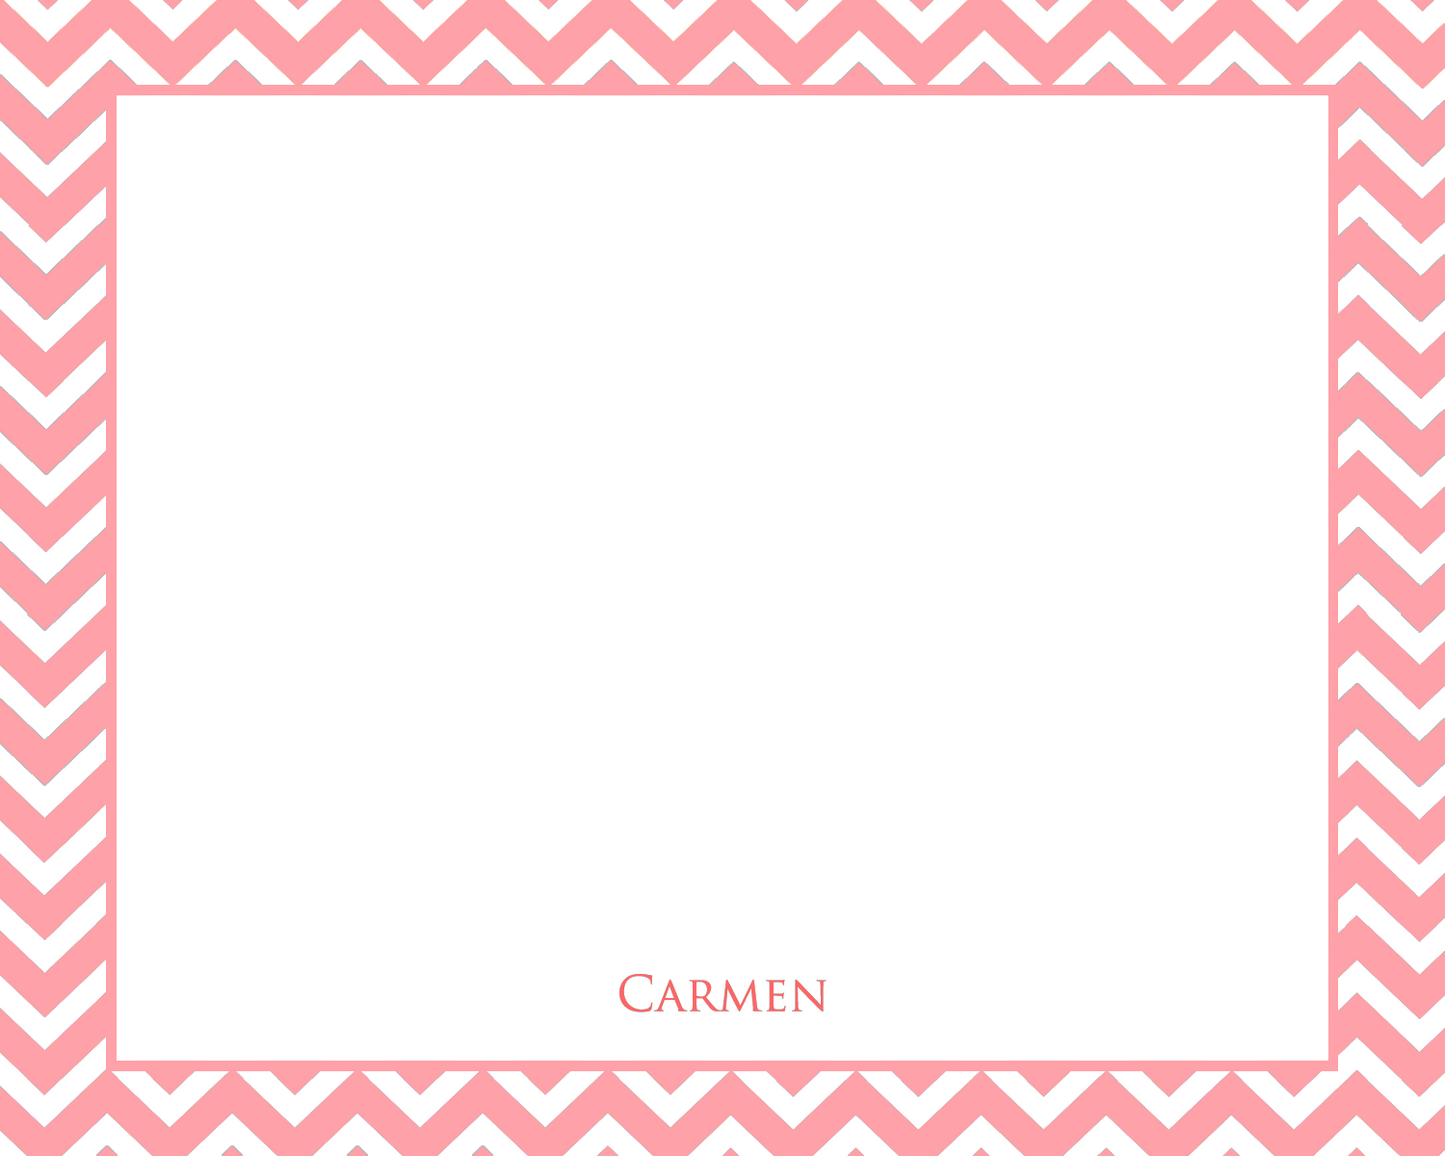 Carmen Personalized Stationery Set